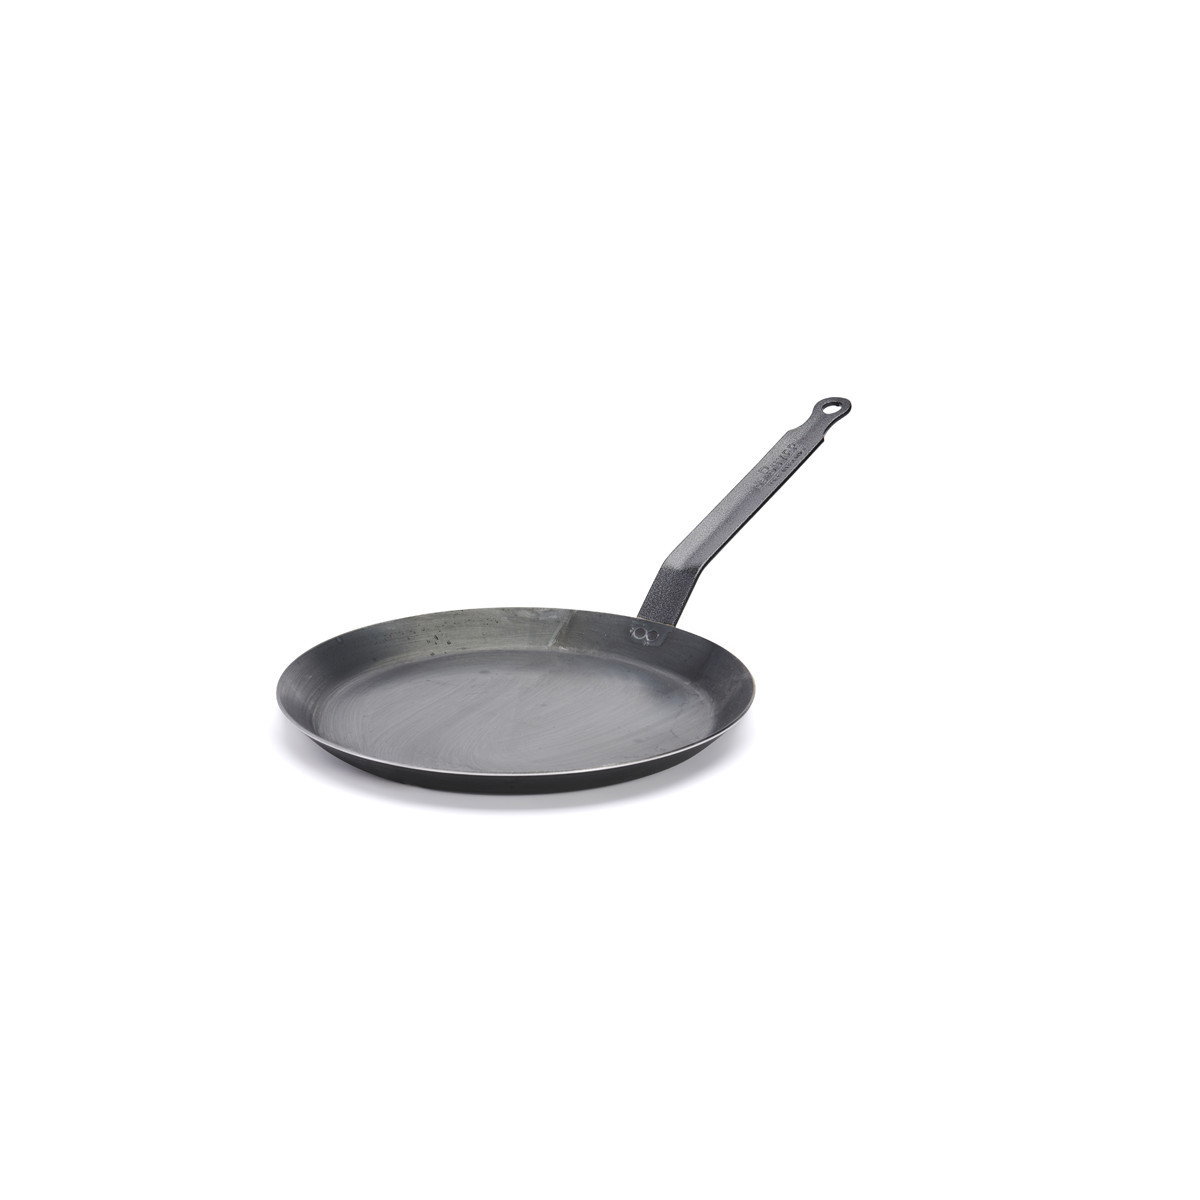 Le Creuset pancake pan/crepe pan 27cm, black